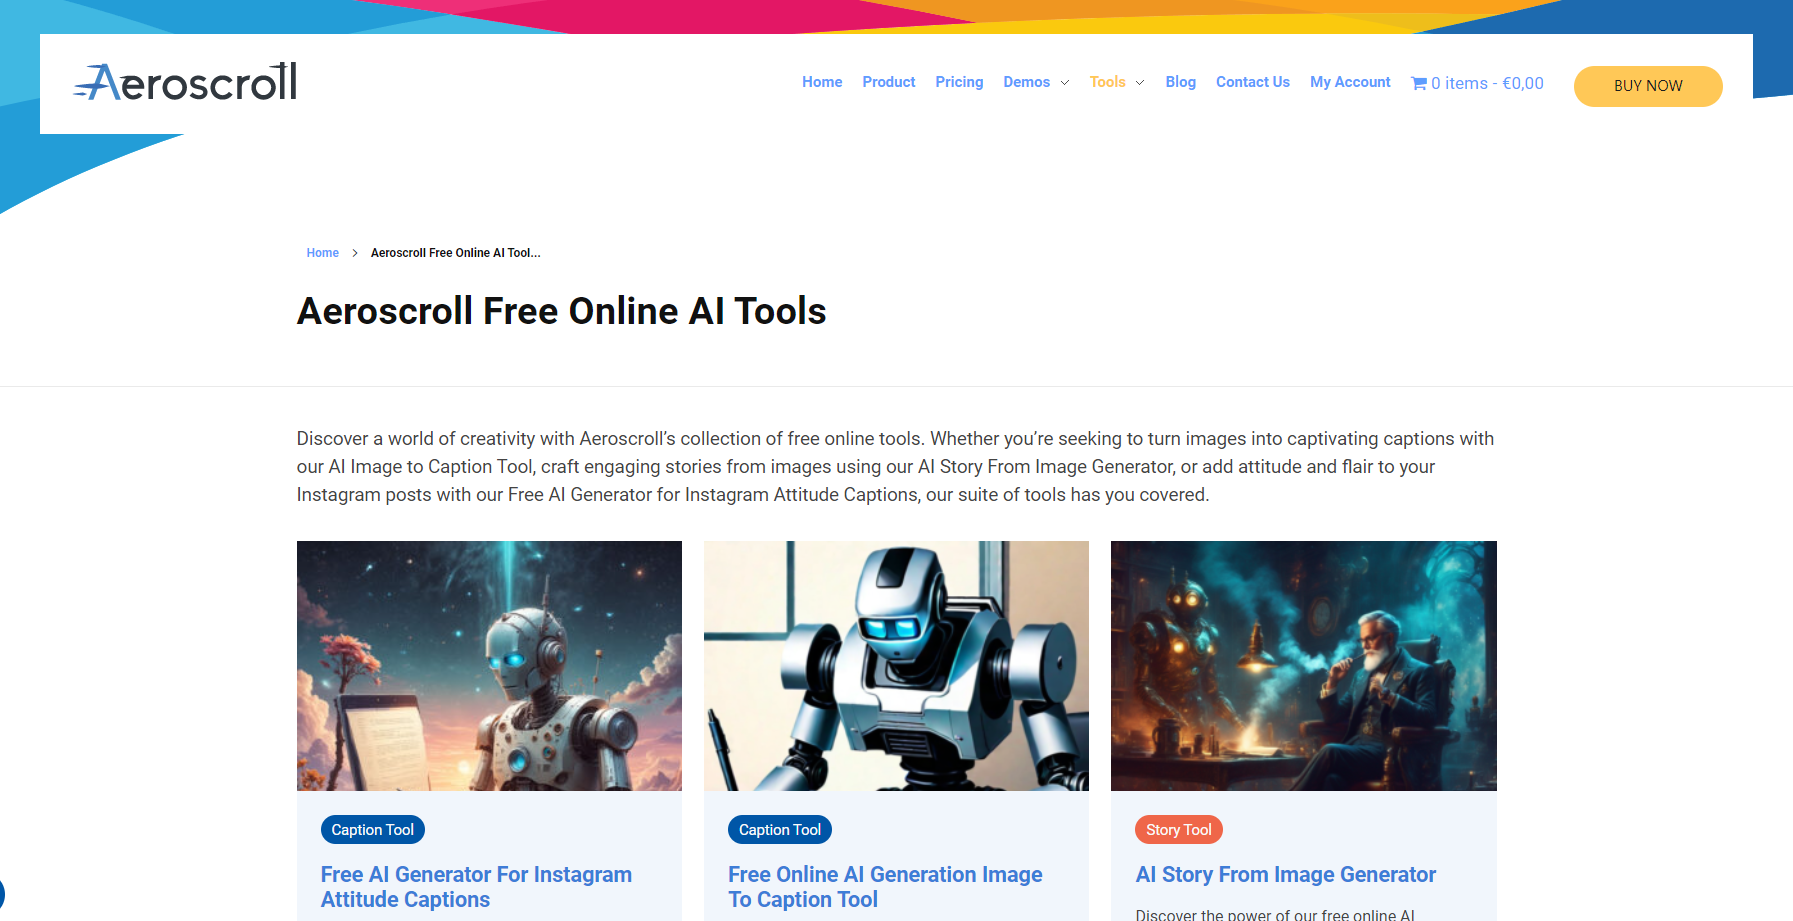 
Aeroscroll Free AI Online Tools
